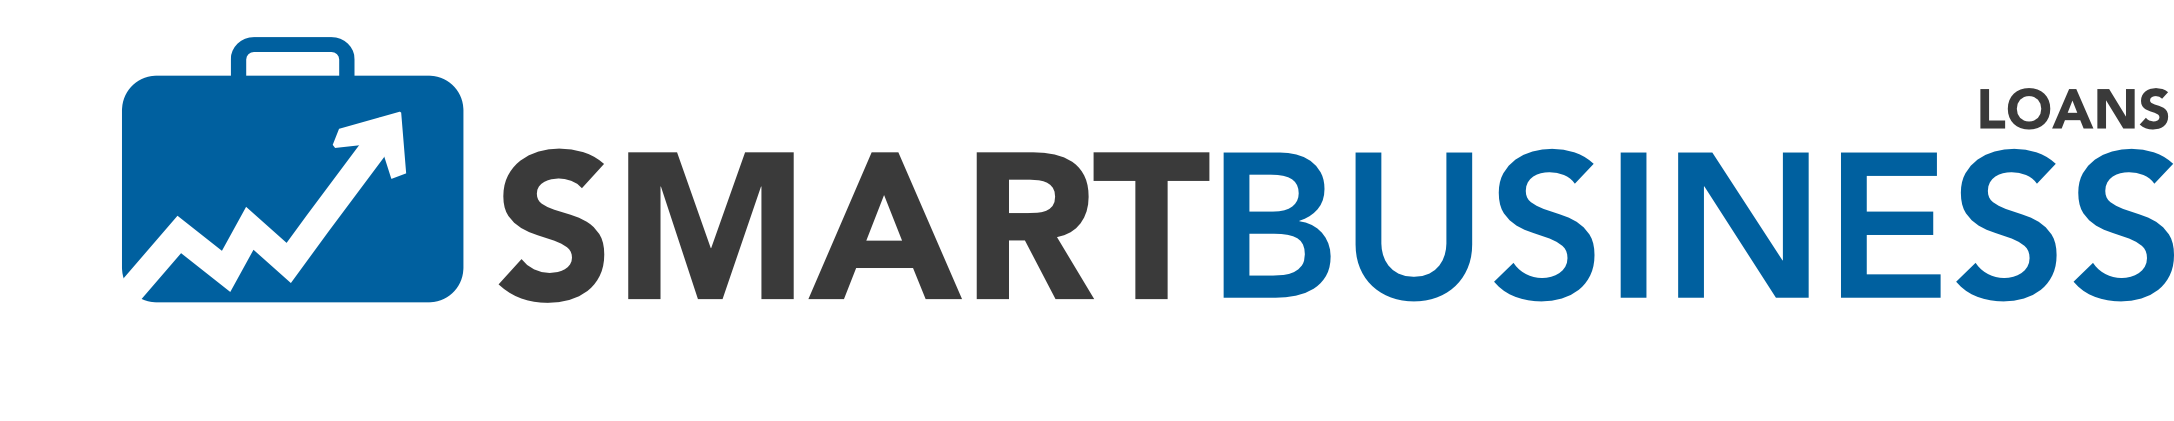 Smart Business Loans Logo